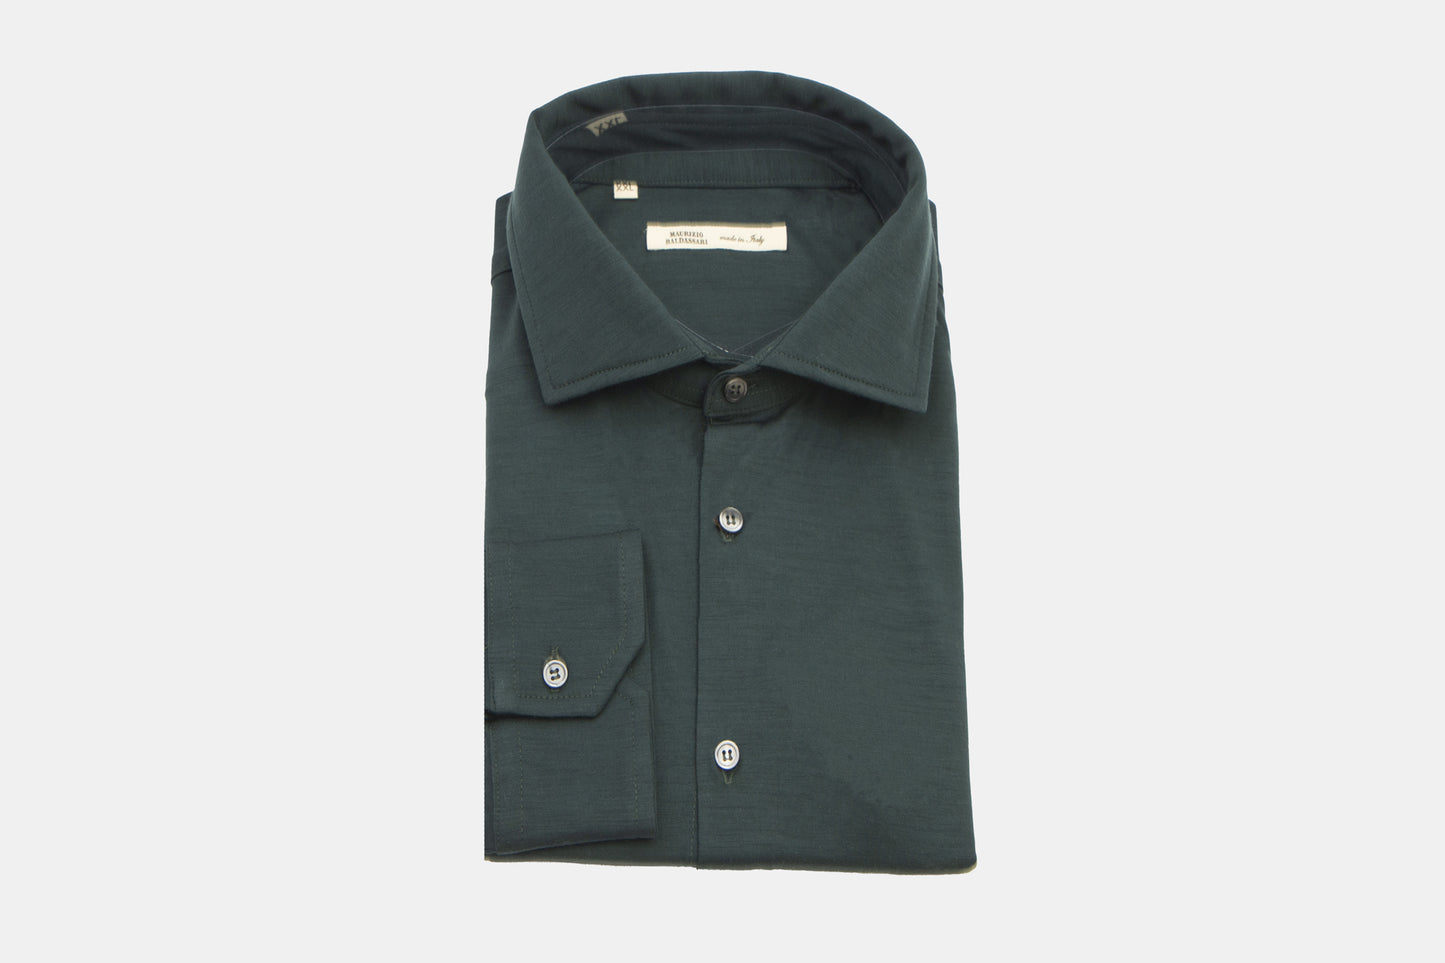 khakis of Carmel - wool shirt